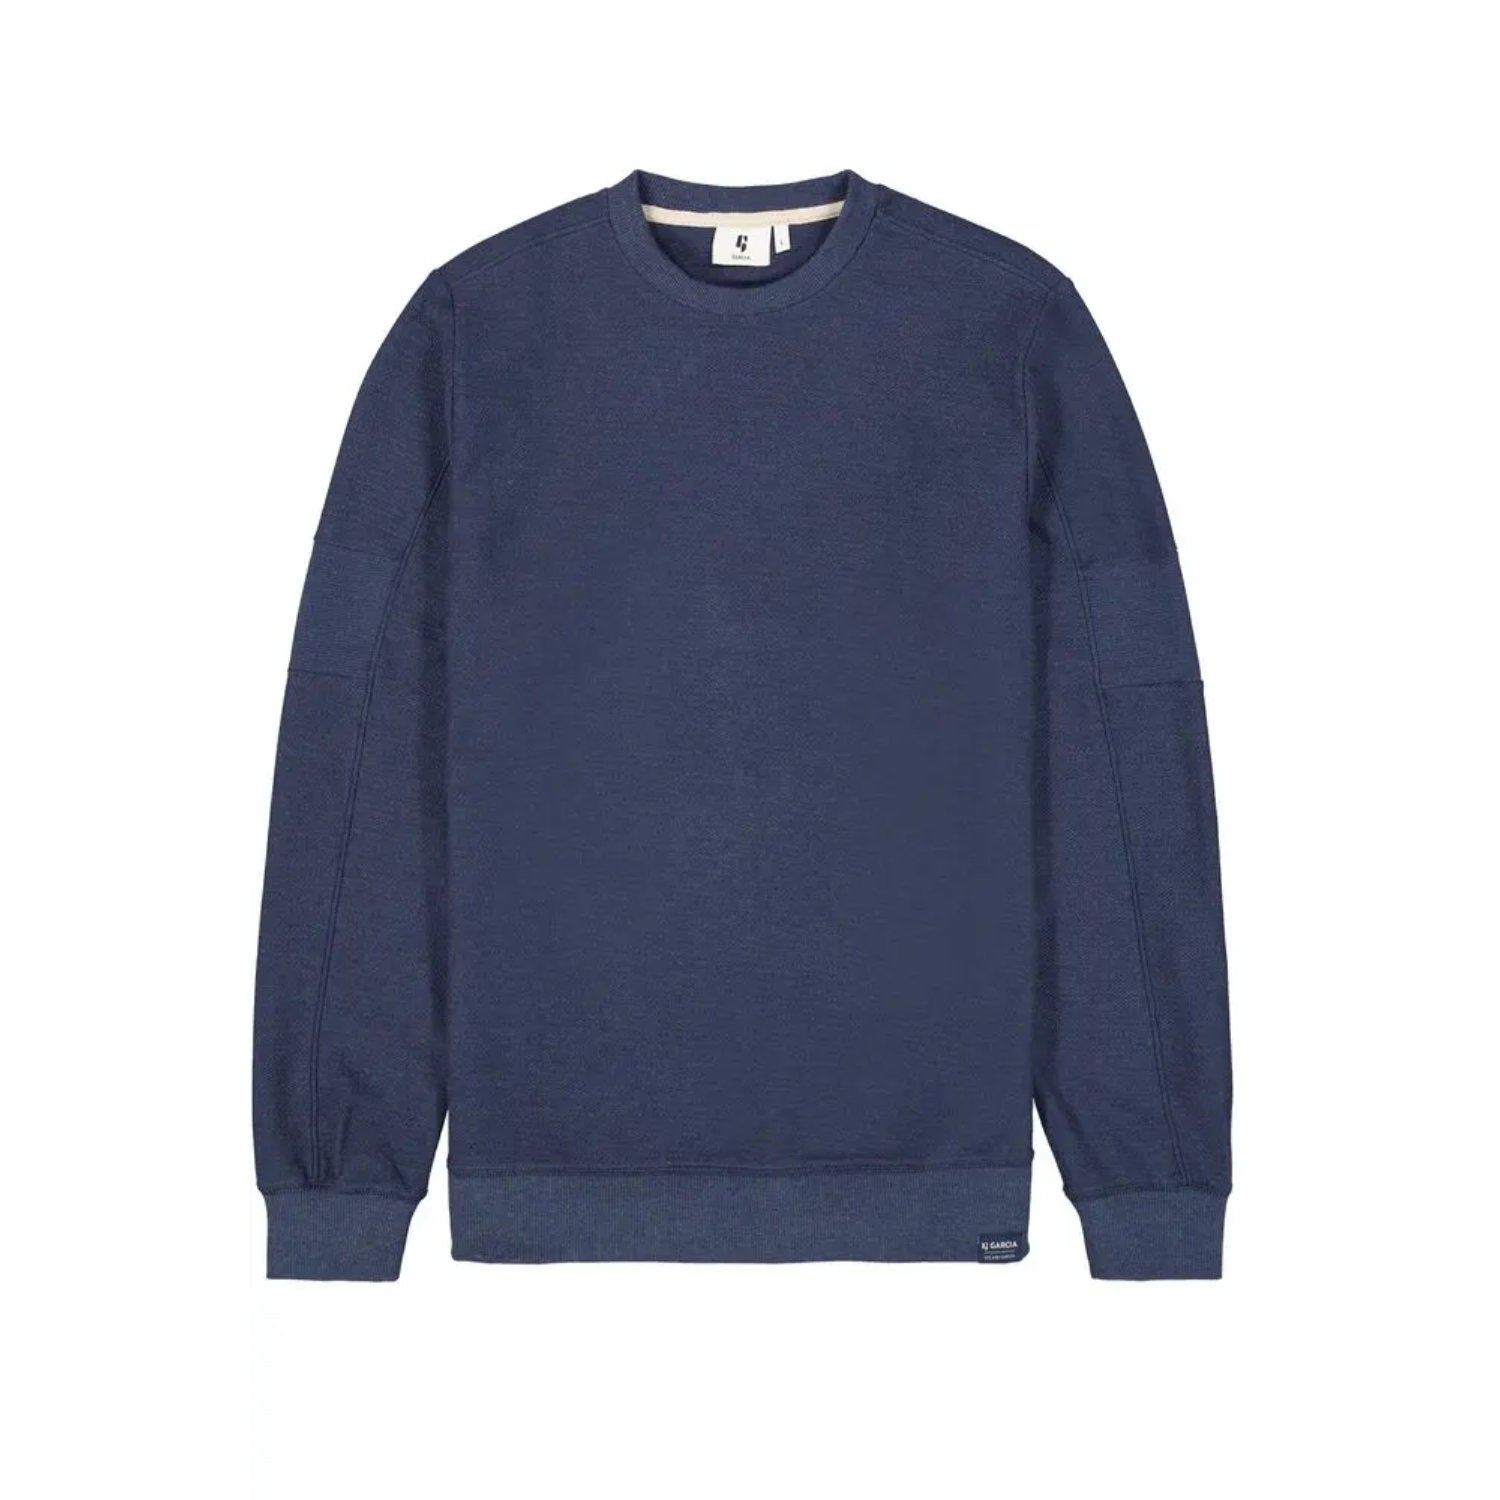 'Garcia H31061 Blue Pullover Sweater' in 'Blue' colour